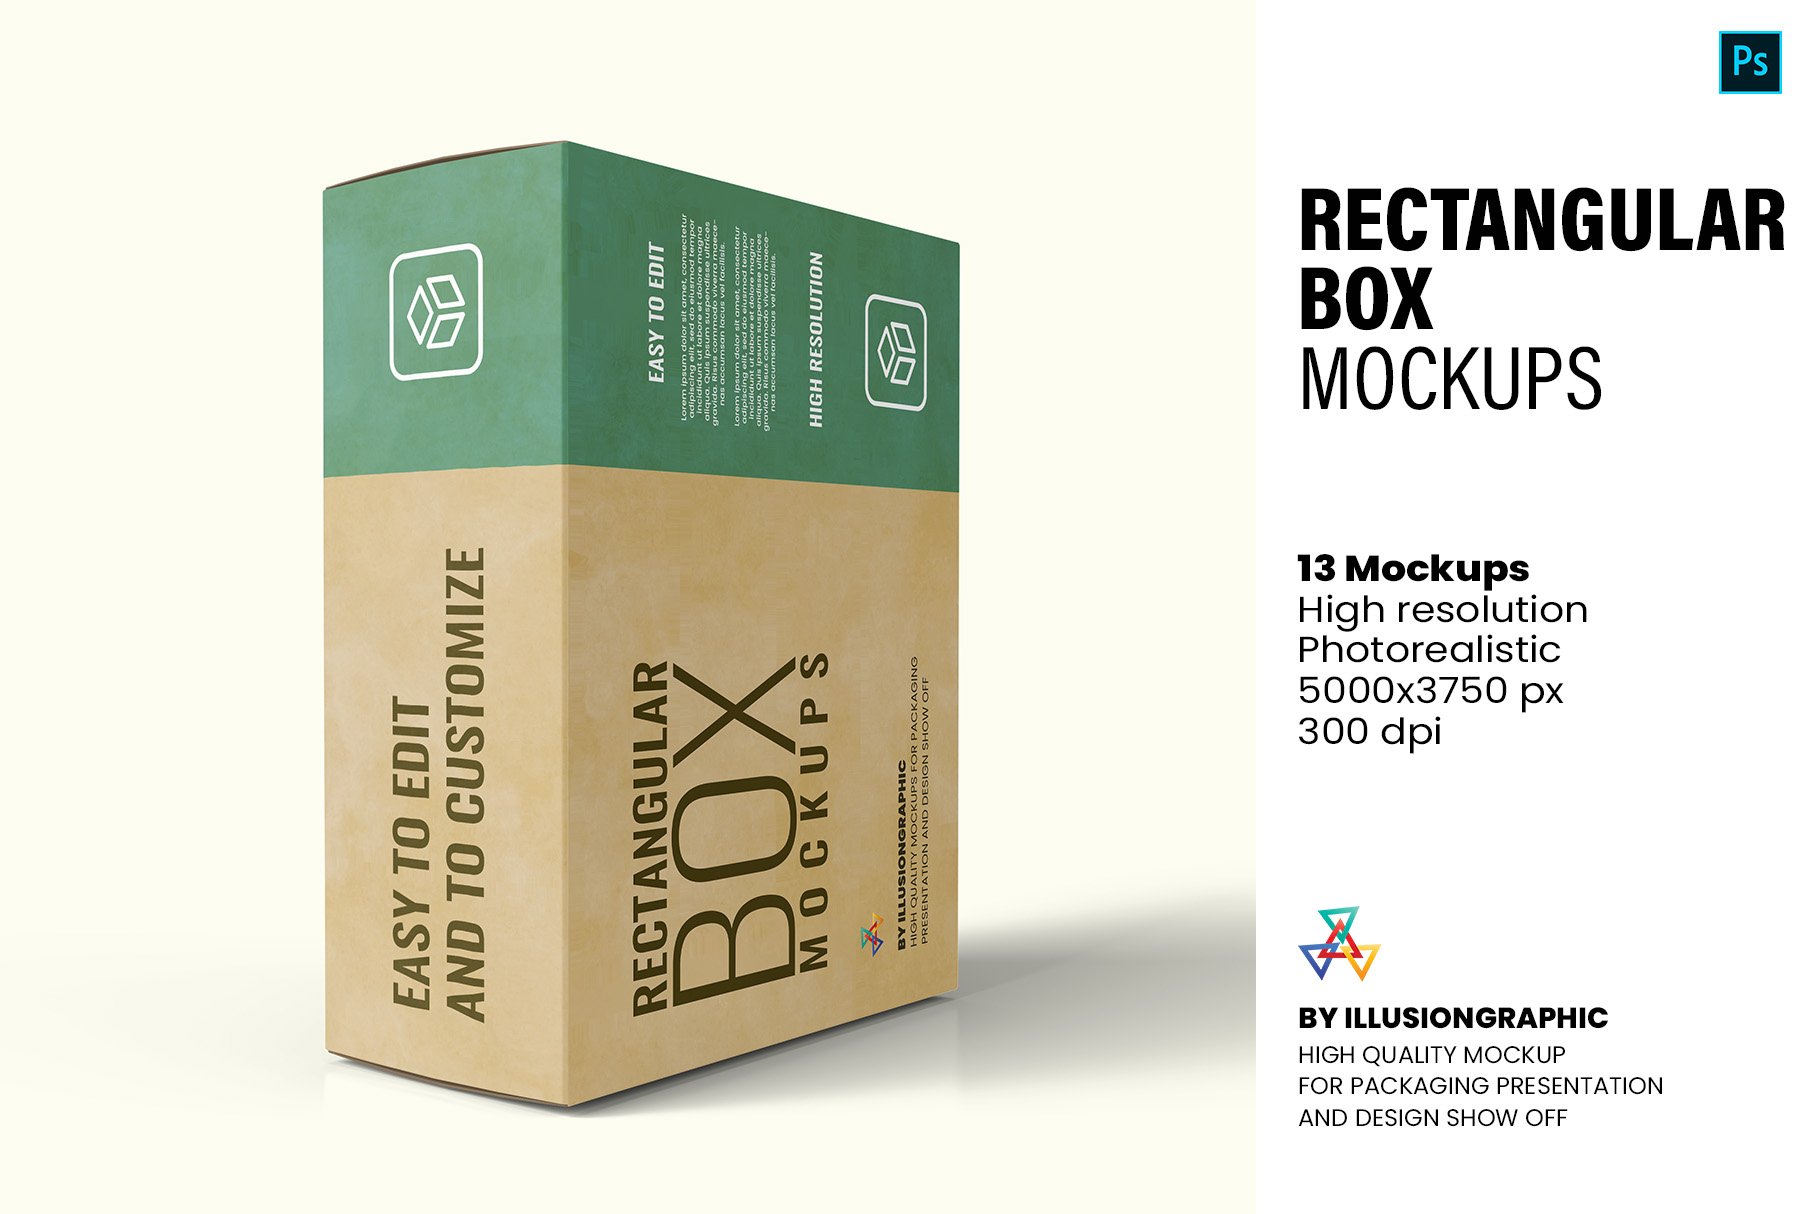 Rectangular Box Mockups - 13 views cover image.